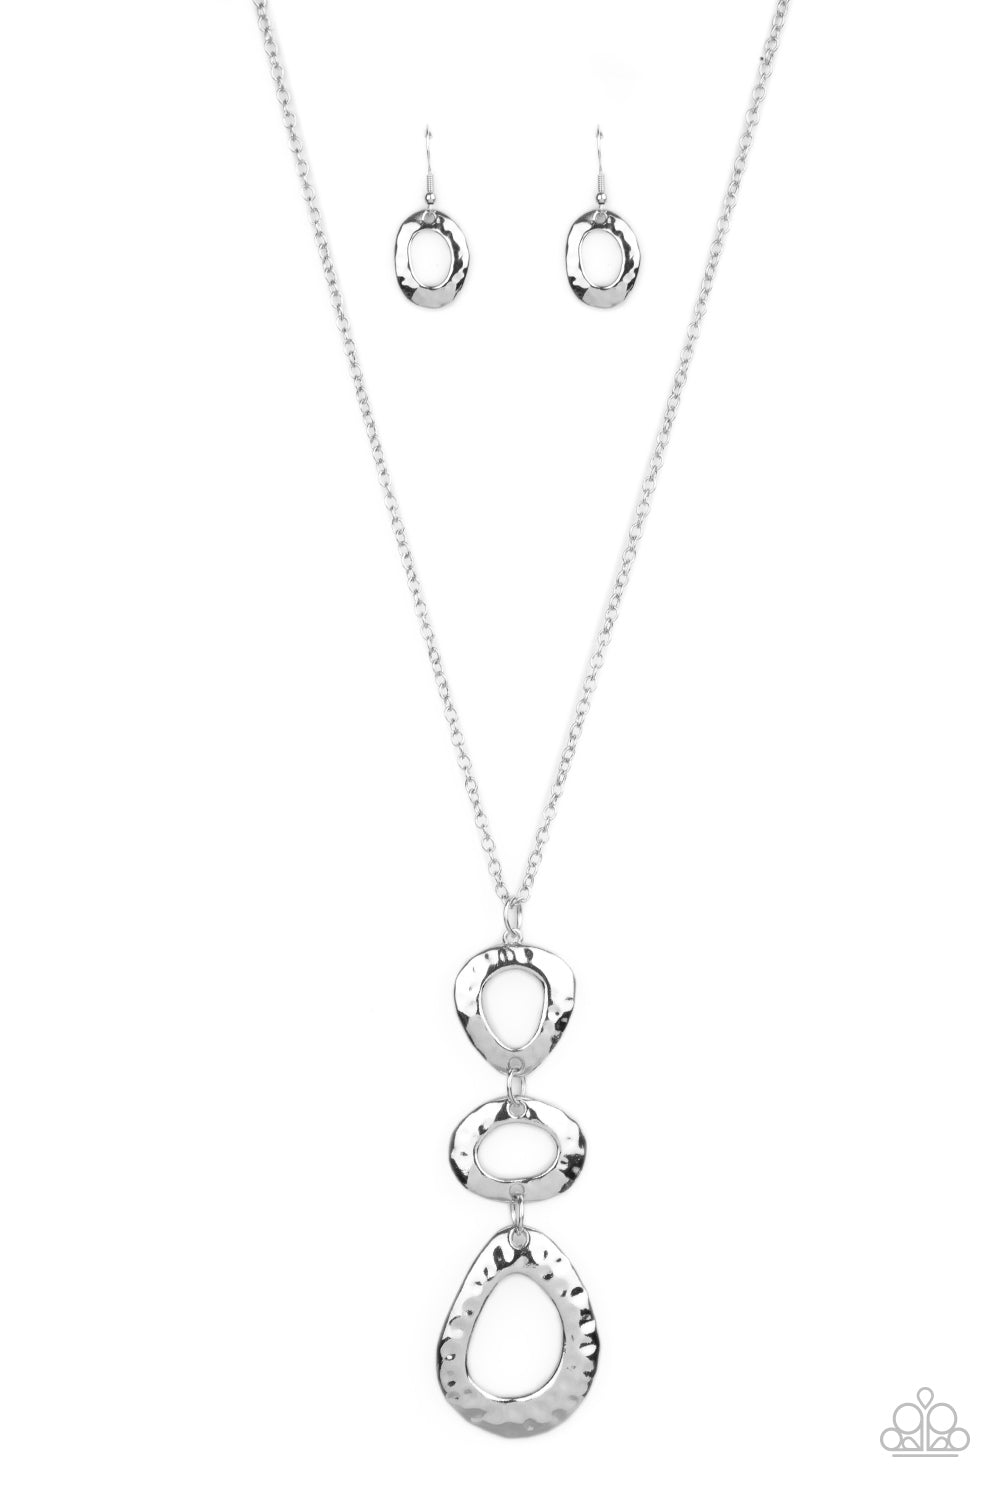 Gallery Artisan - Silver Necklace Set - Princess Glam Shop